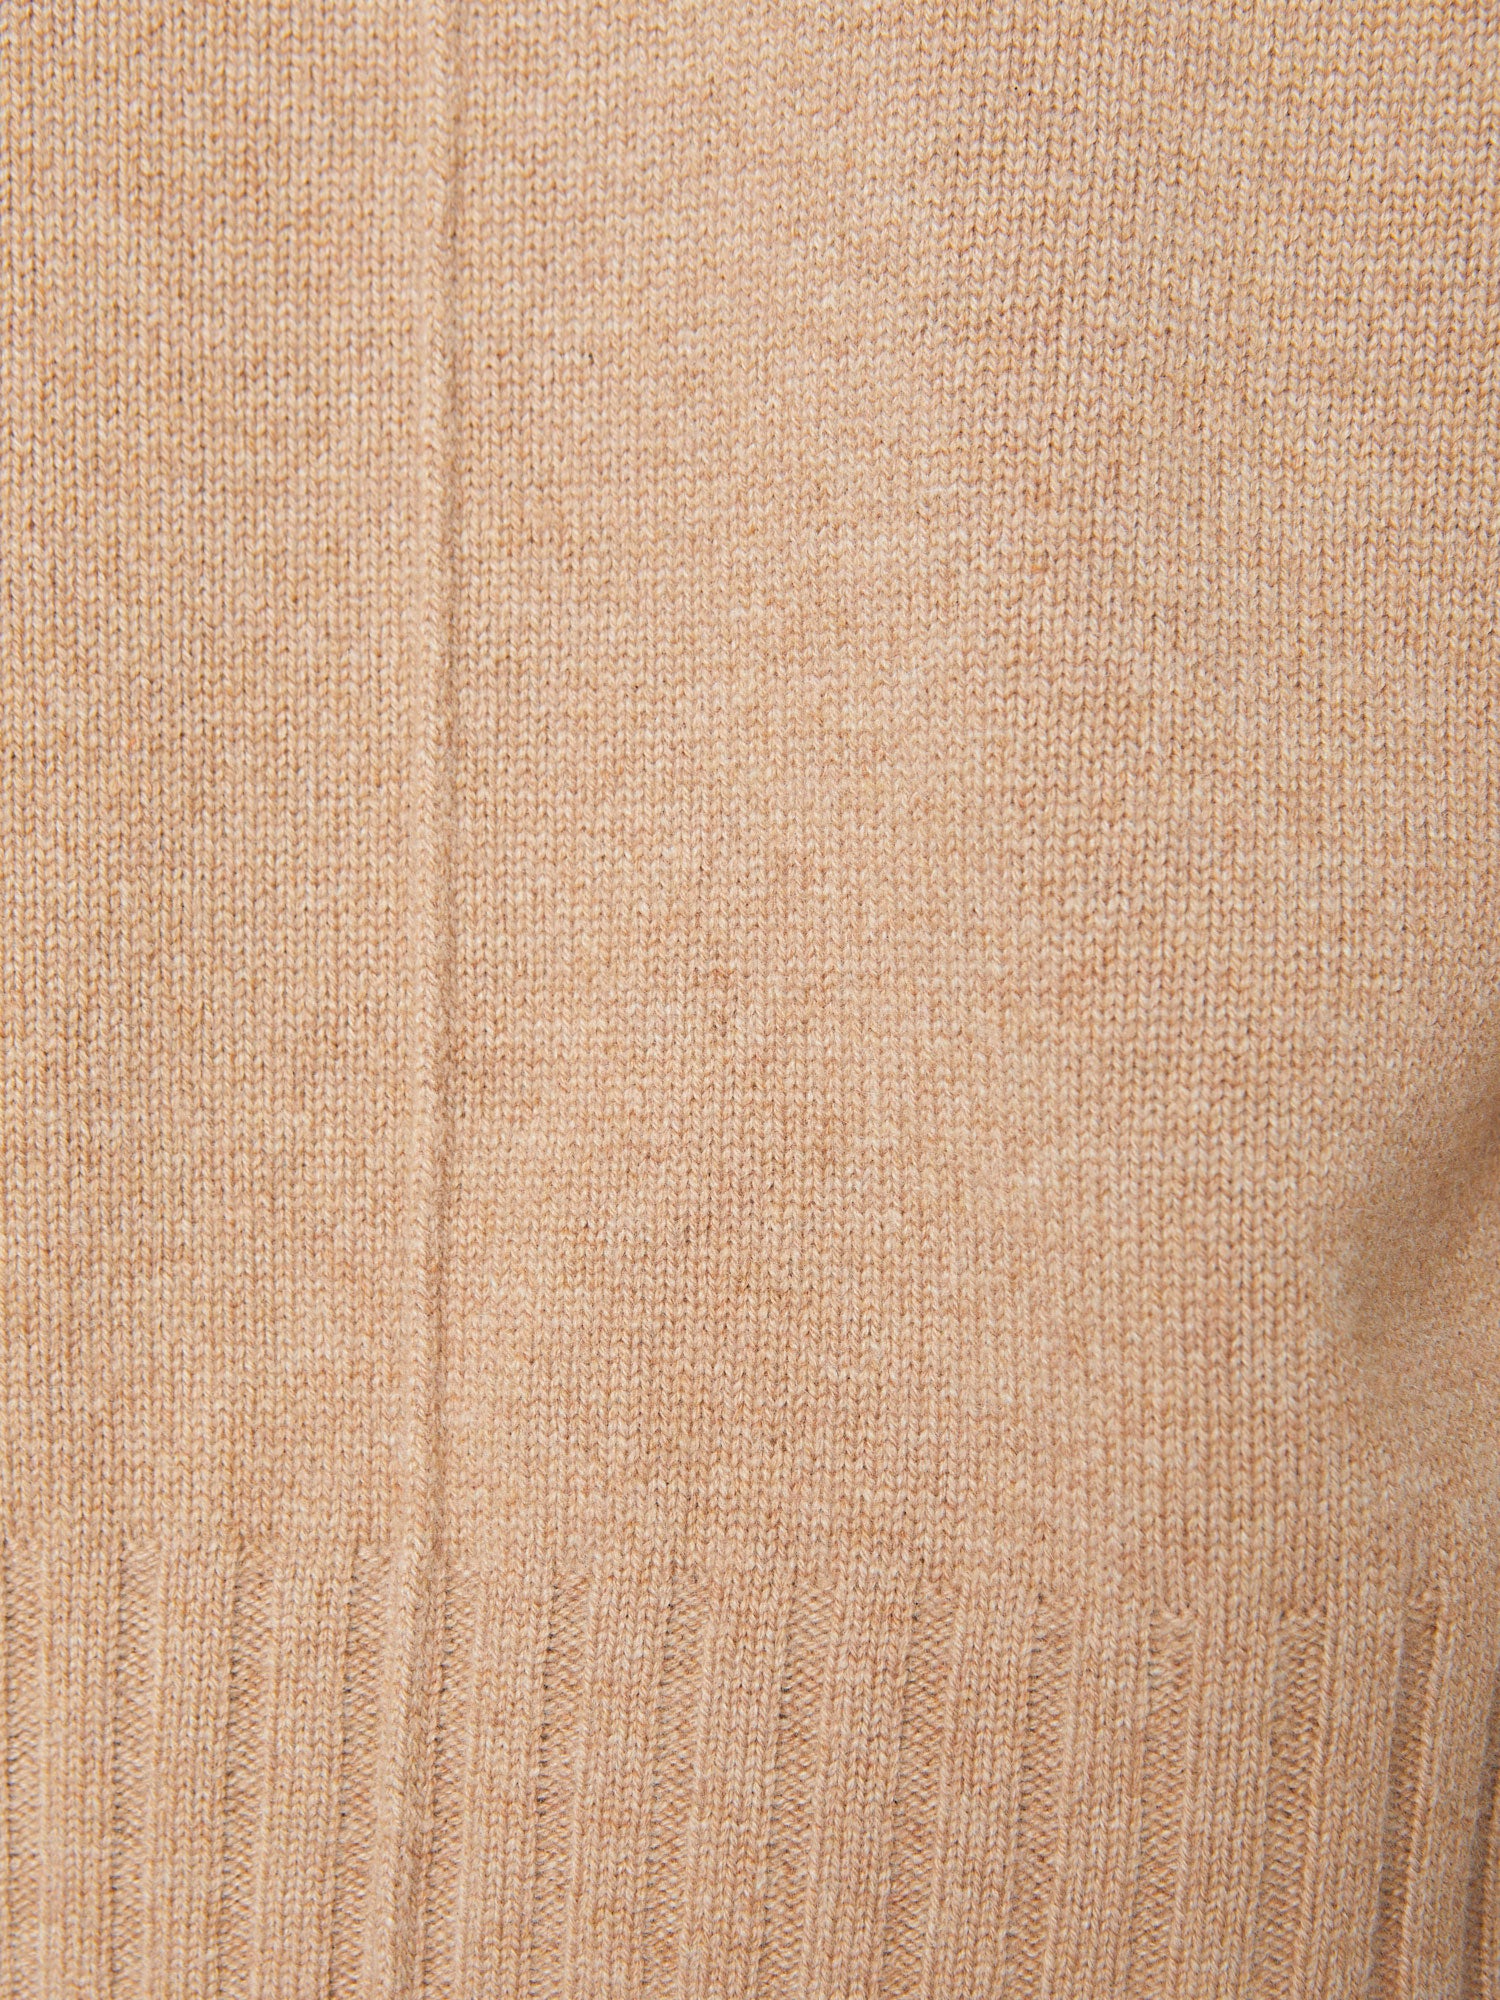 Yumi cashmere turtleneck tan sweater close up 2